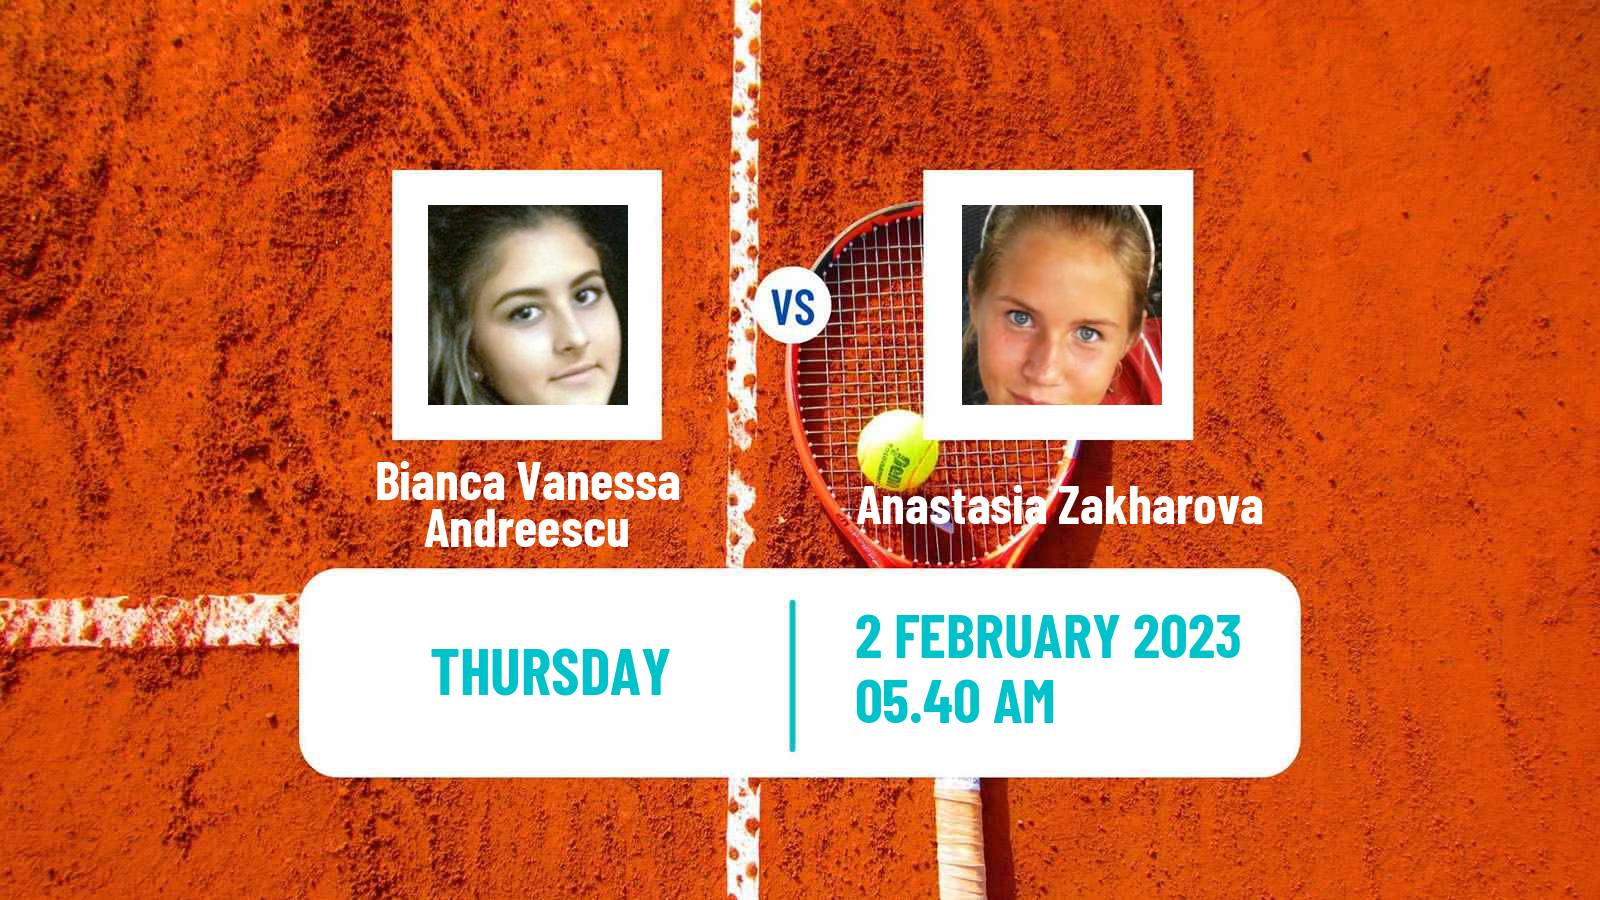 Tennis WTA Hua Hin Bianca Vanessa Andreescu - Anastasia Zakharova